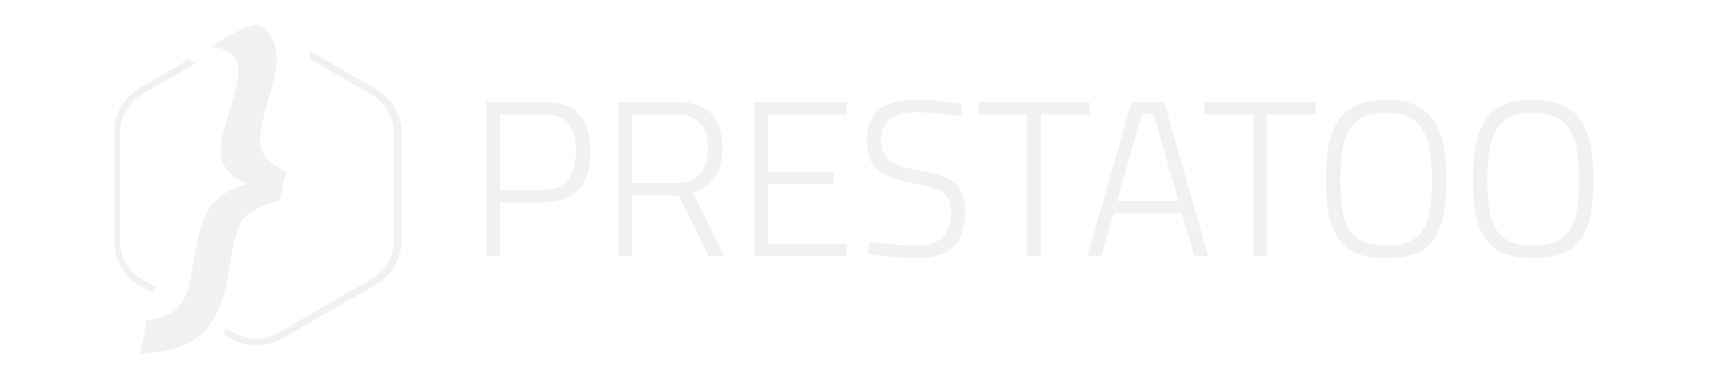 Prestatoo Création Site Web